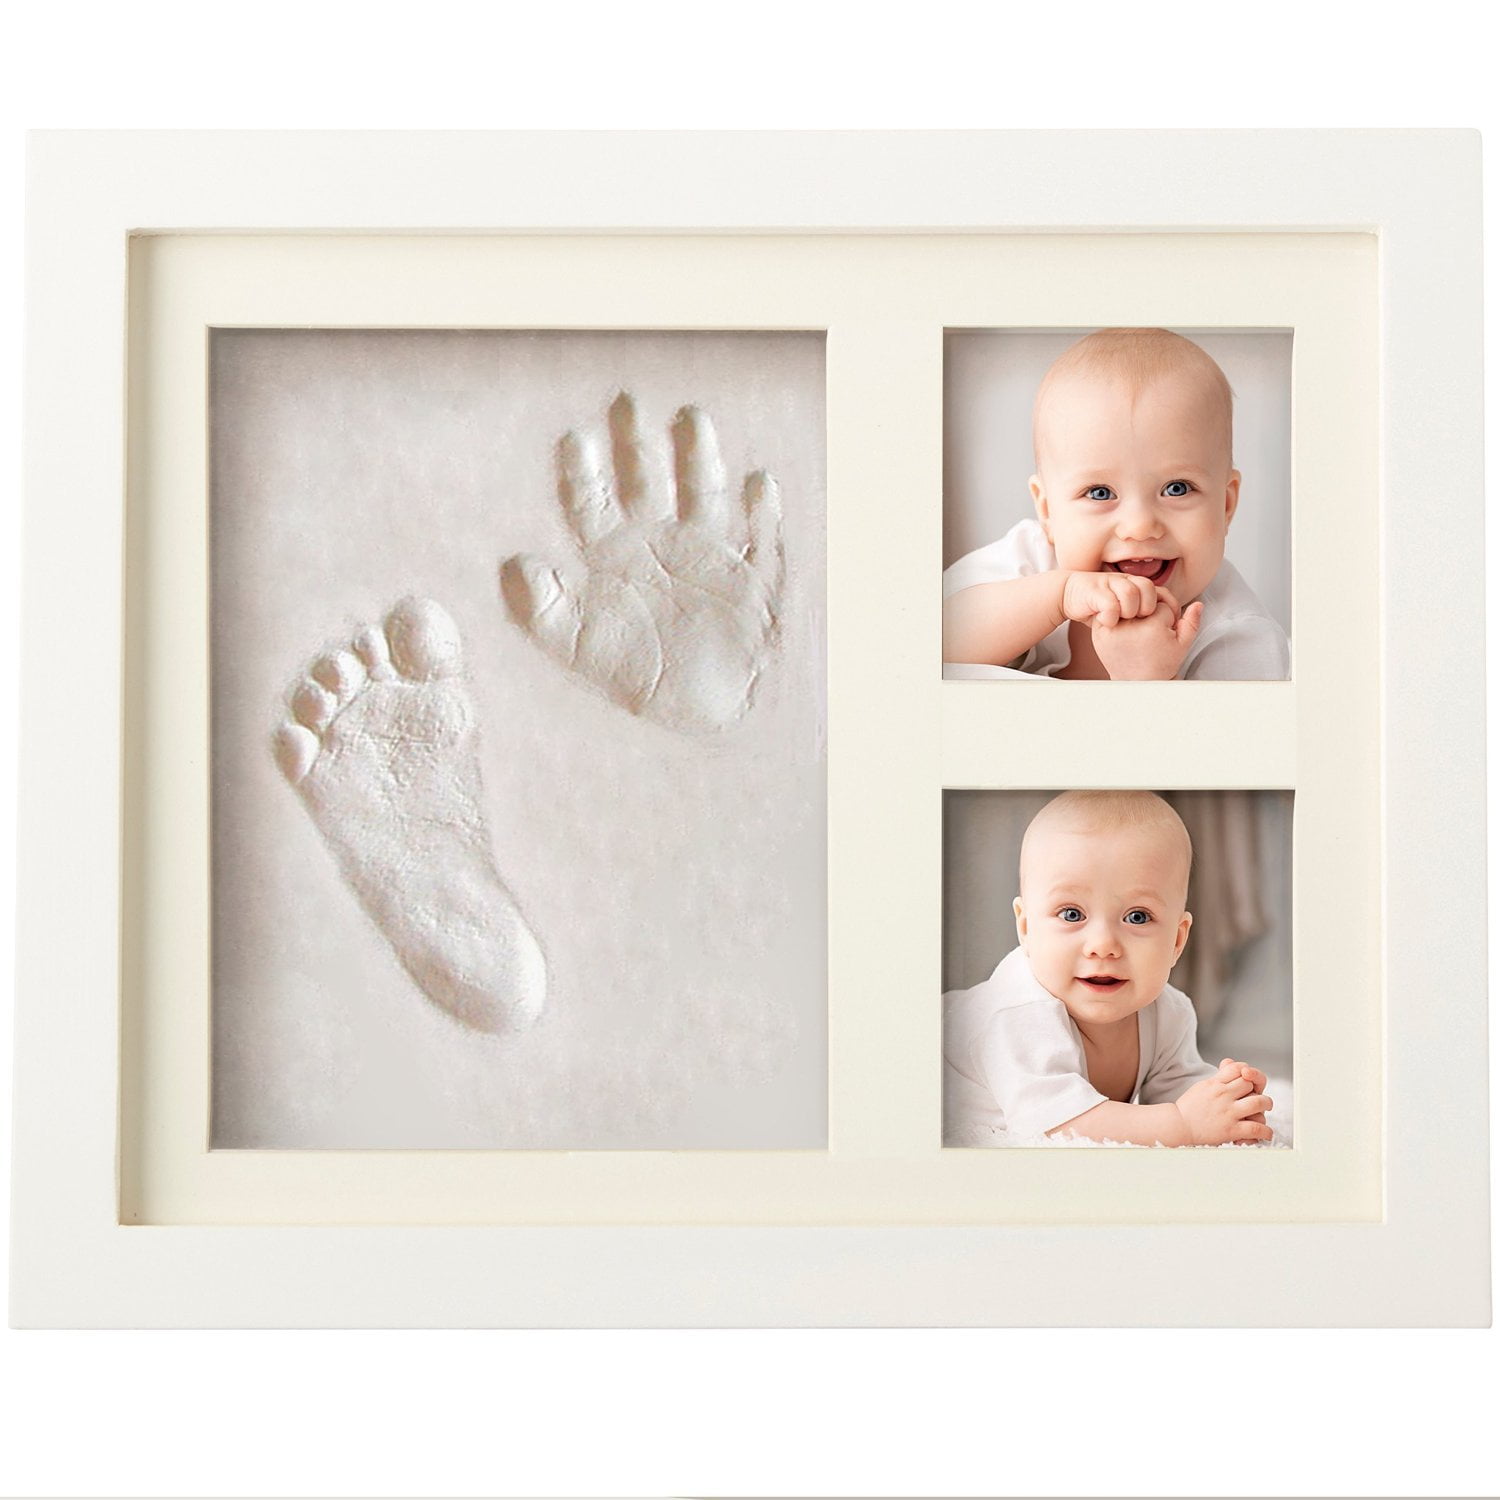 Personalised Ten Little Fingers New Baby Photo Frame Keepsake Gift 6x4 